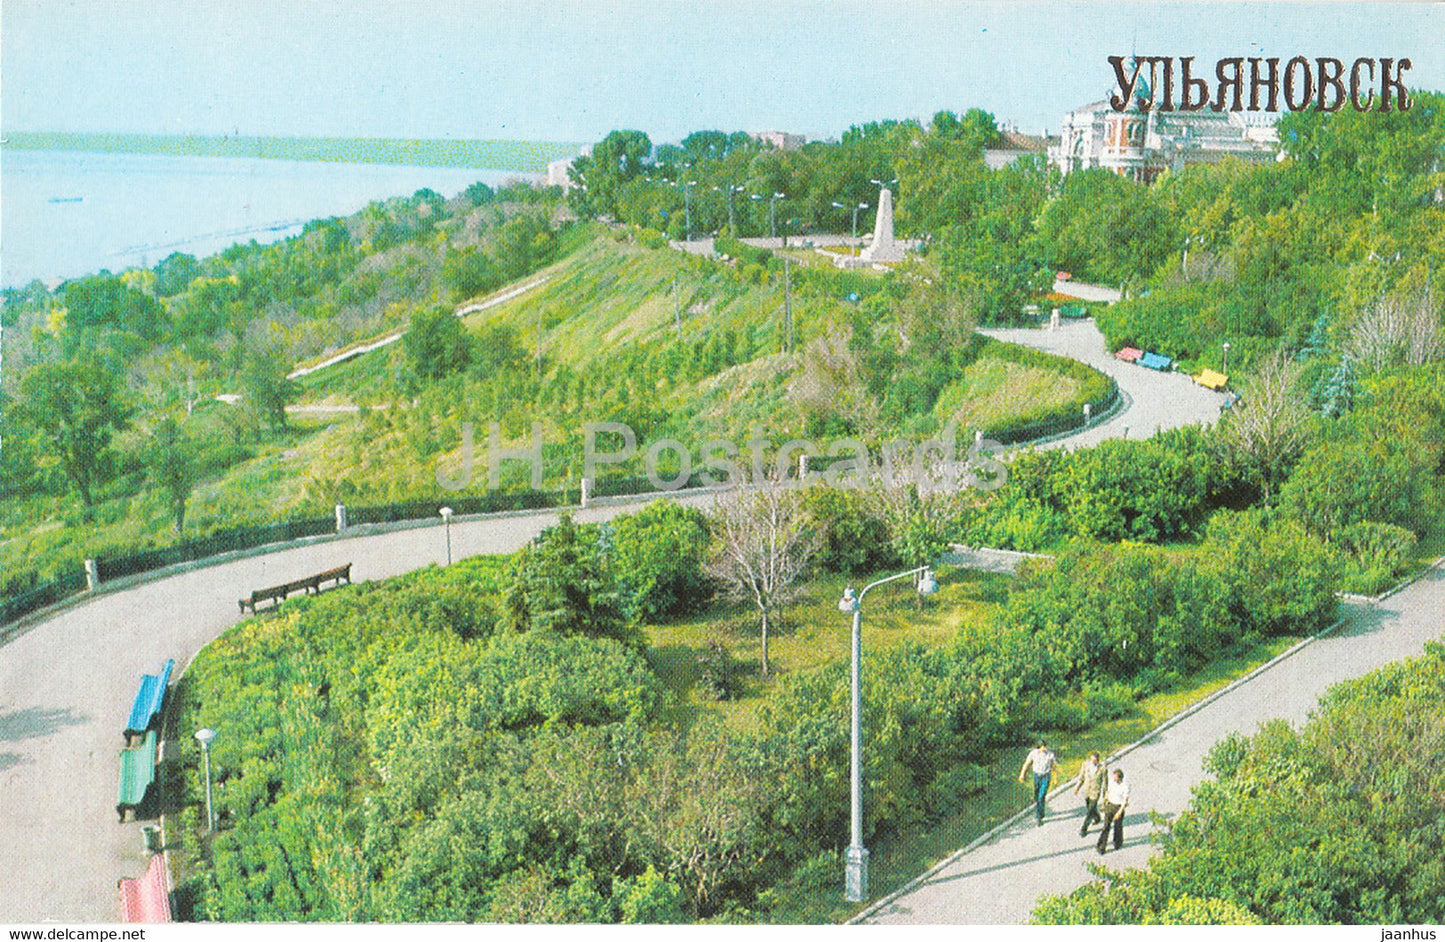 Ulyanovsk - Boulevard Novyi Venets - 1982 - Russia USSR - unused - JH Postcards